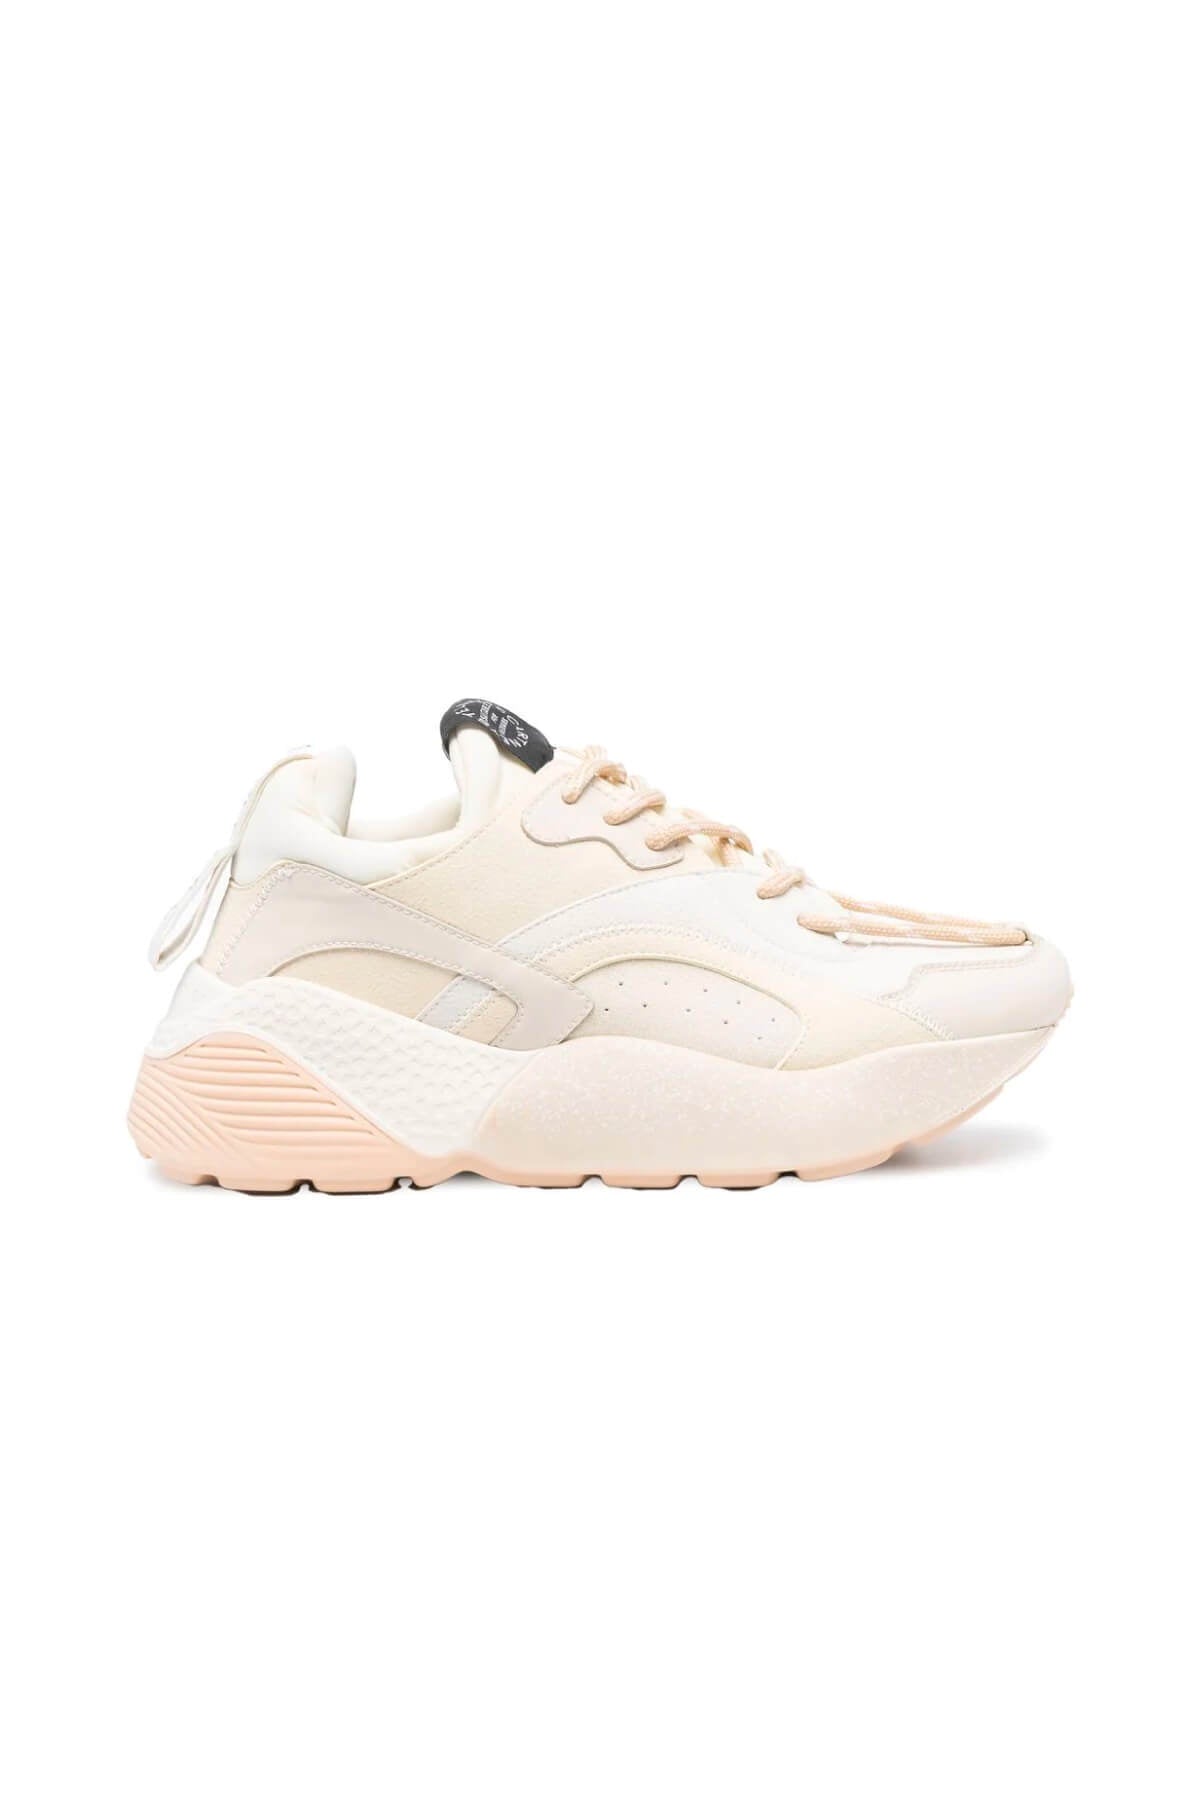 Stella McCartney Pastel Monochrome Eclypse Sneaker - Multi White